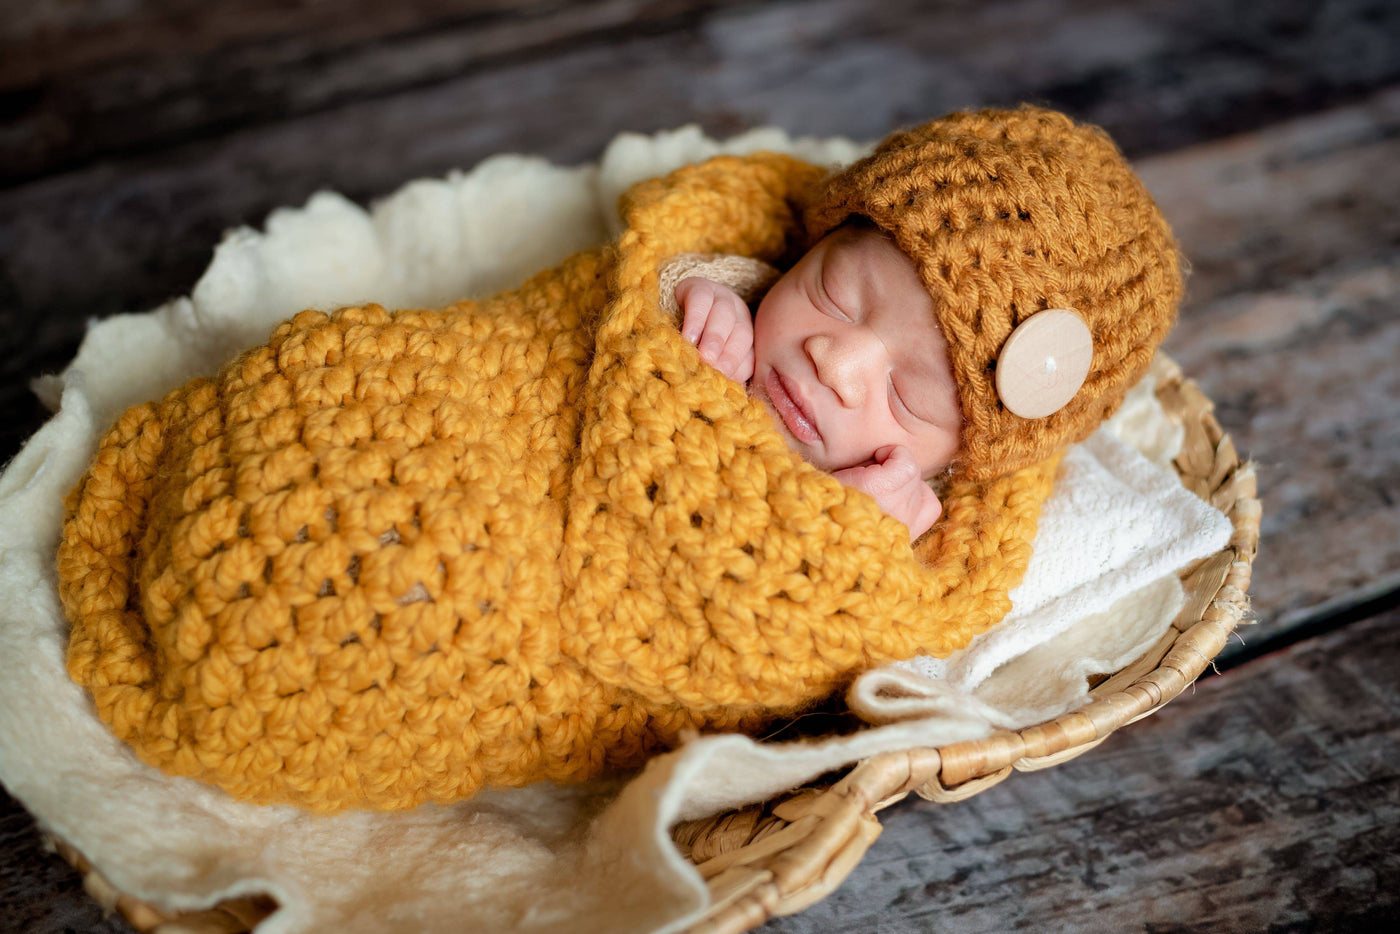 Mustard Yellow Newborn Baby Collared Cocoon - Beautiful Photo Props